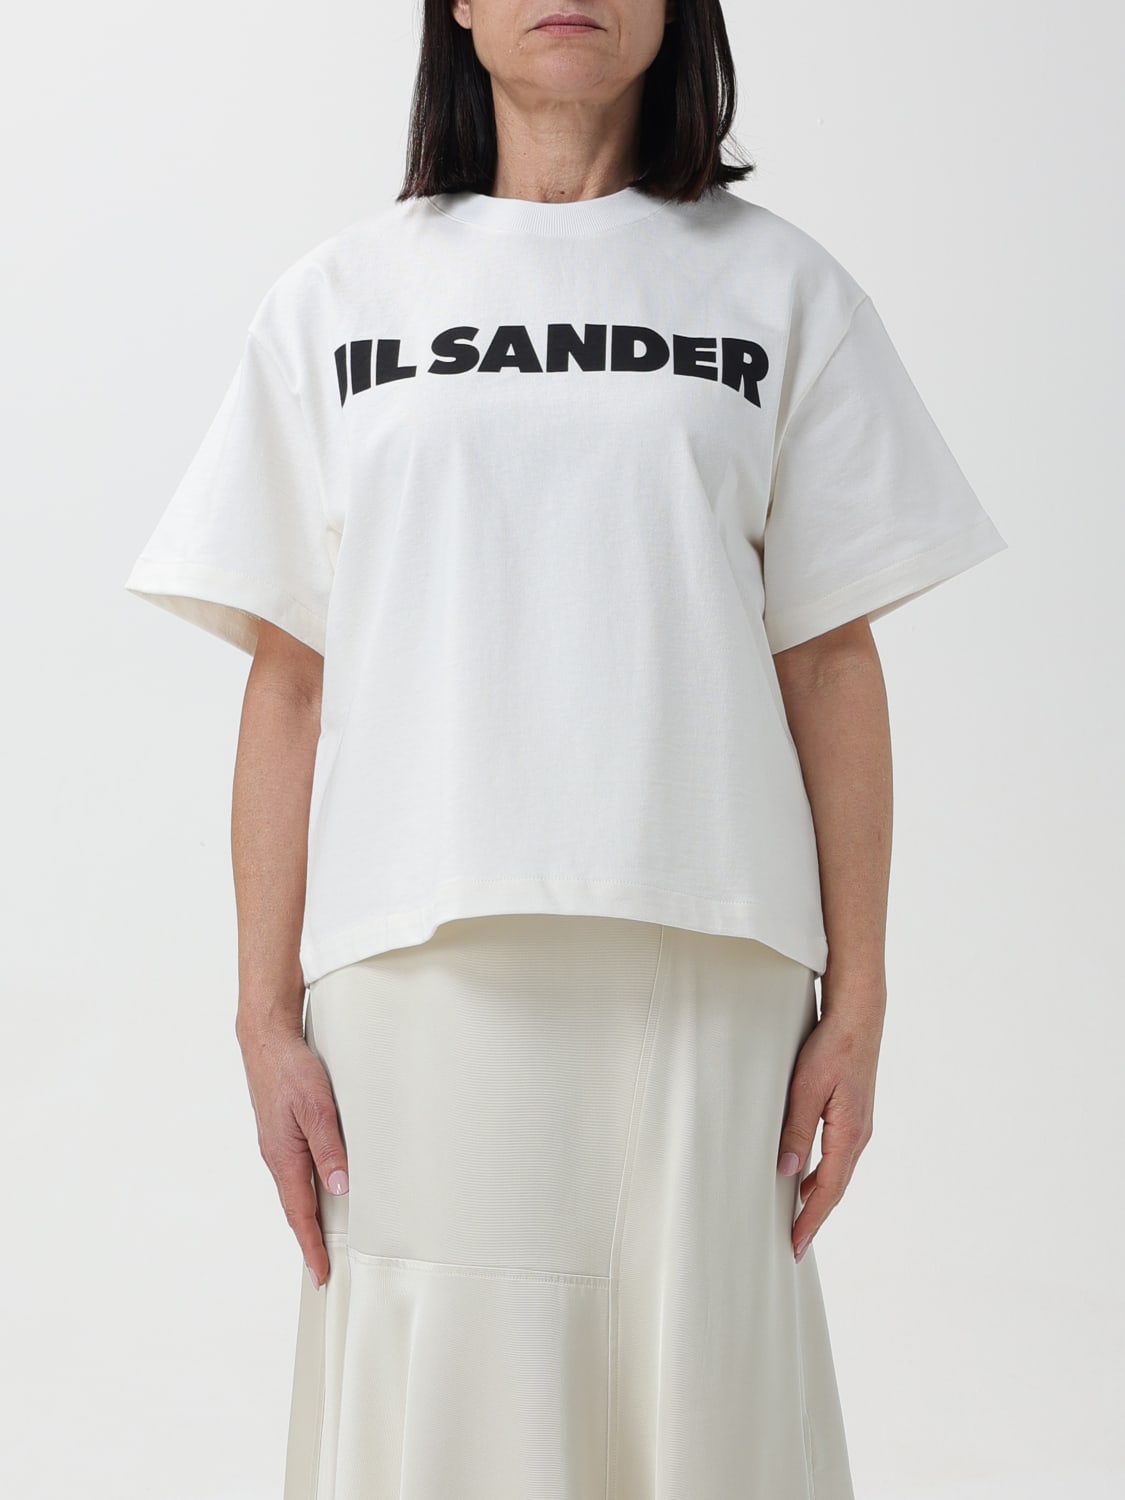 T-shirt woman Jil Sander